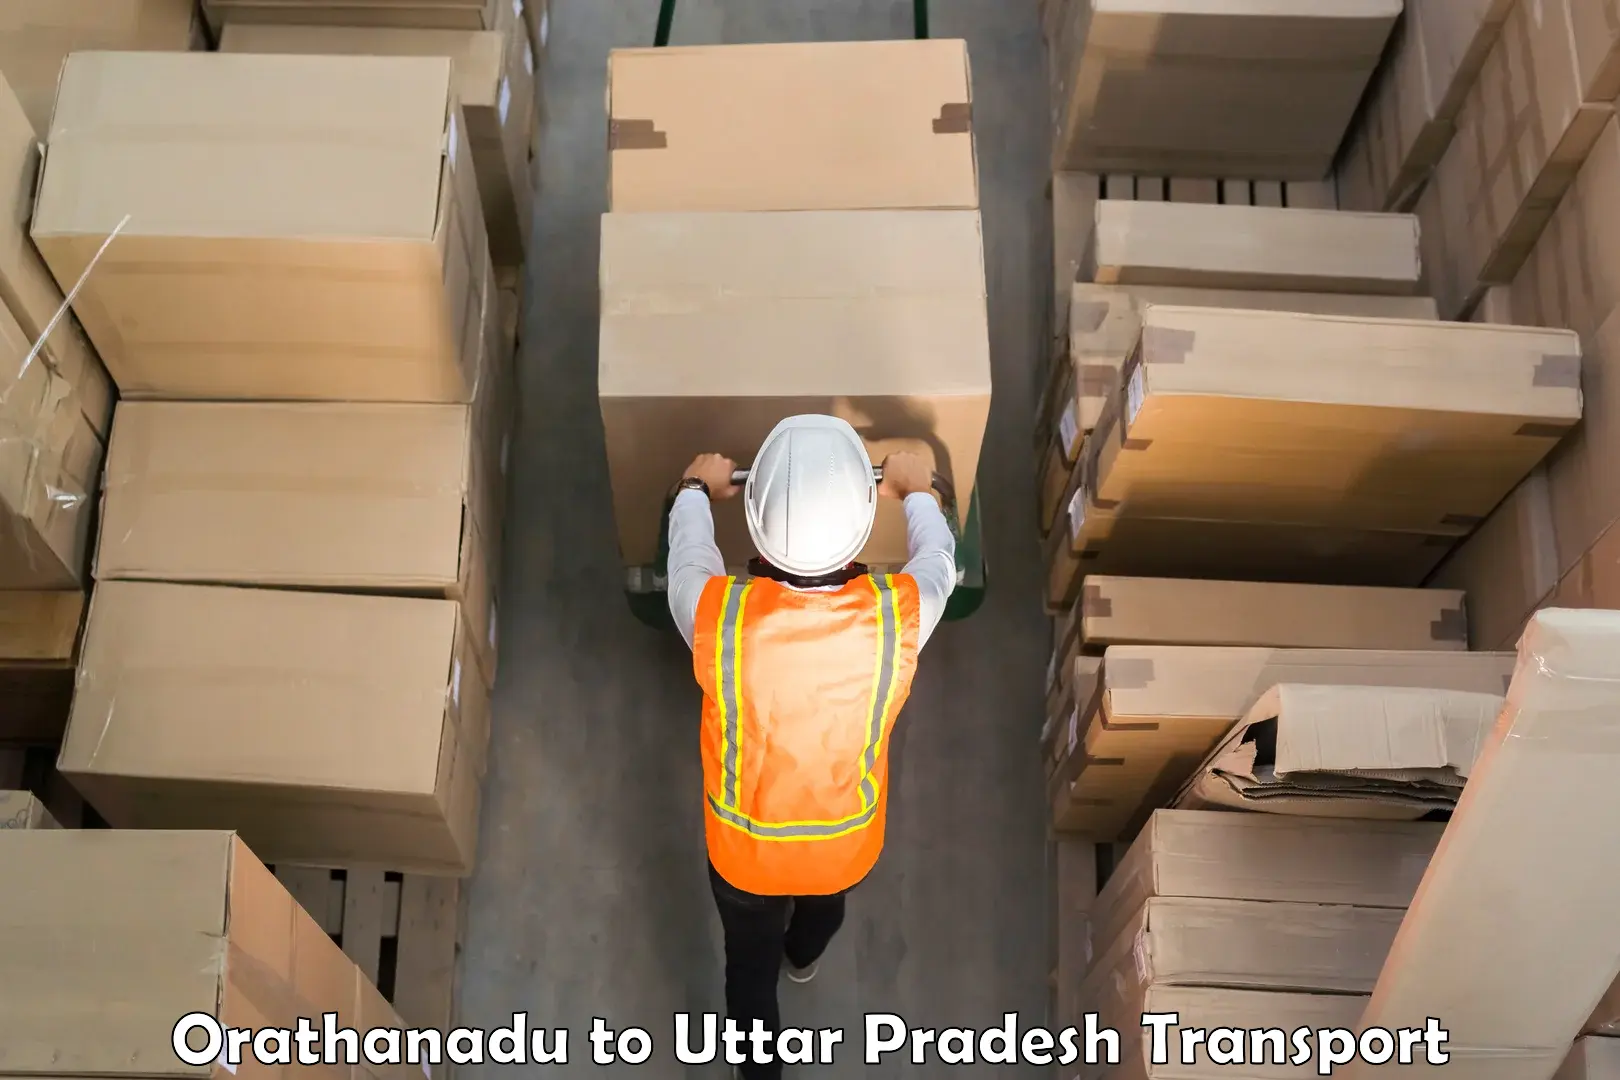 Delivery service Orathanadu to Allahabad